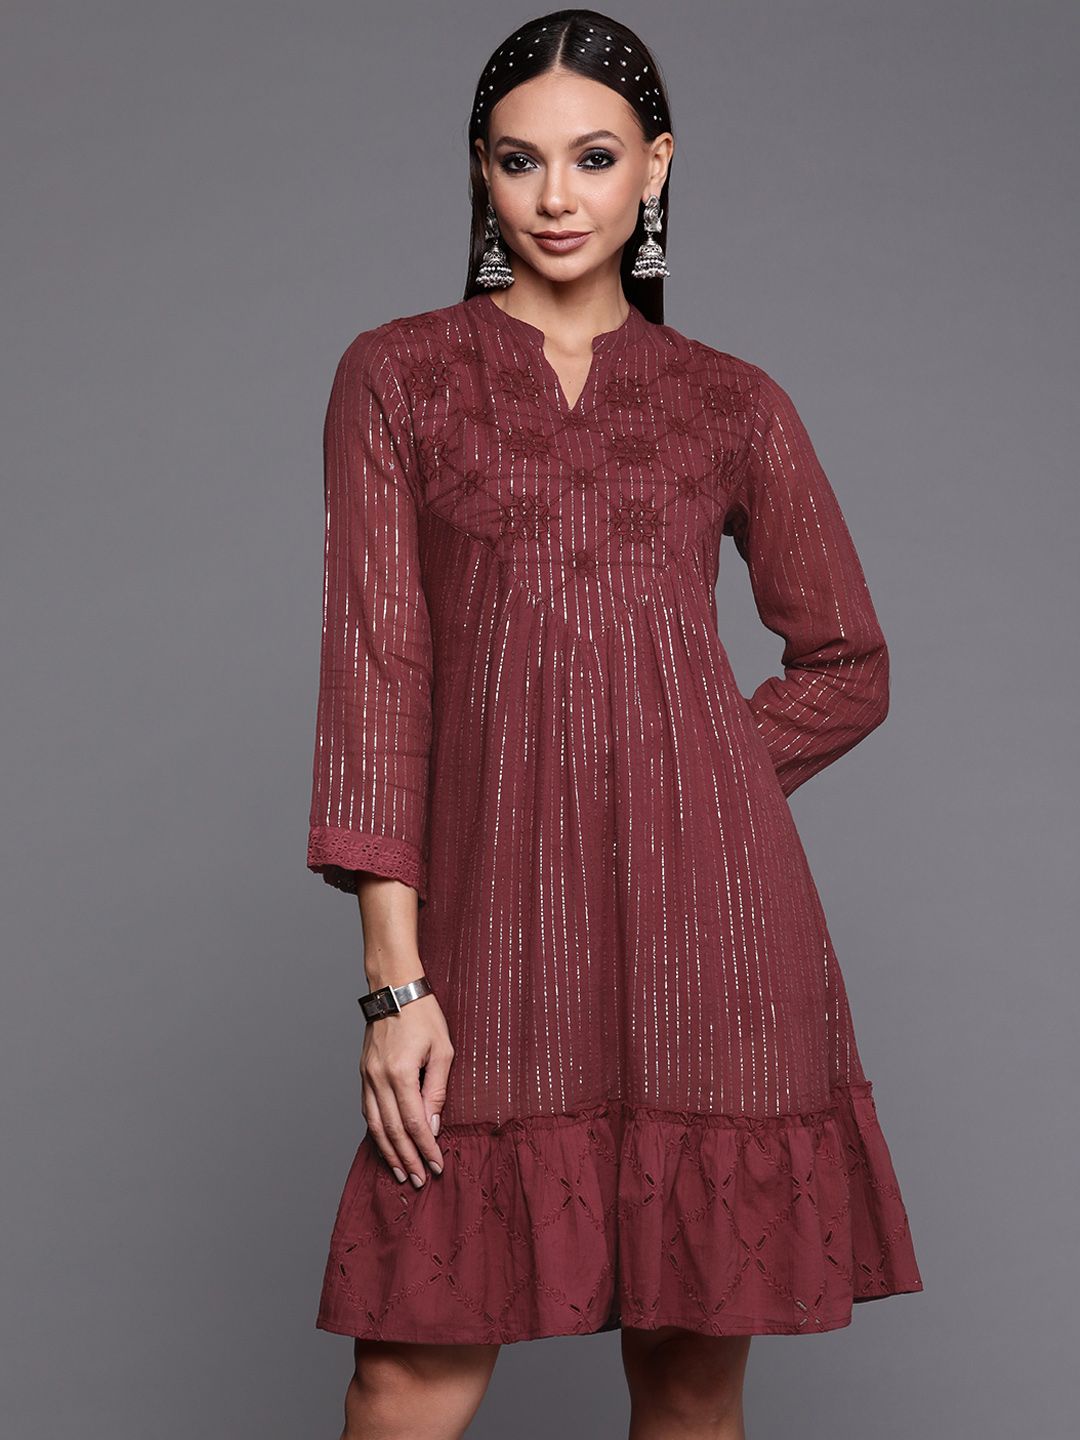 Indo Era Maroon Ethnic Motifs Embroidered Ethnic A-Line Midi Dress Price in India